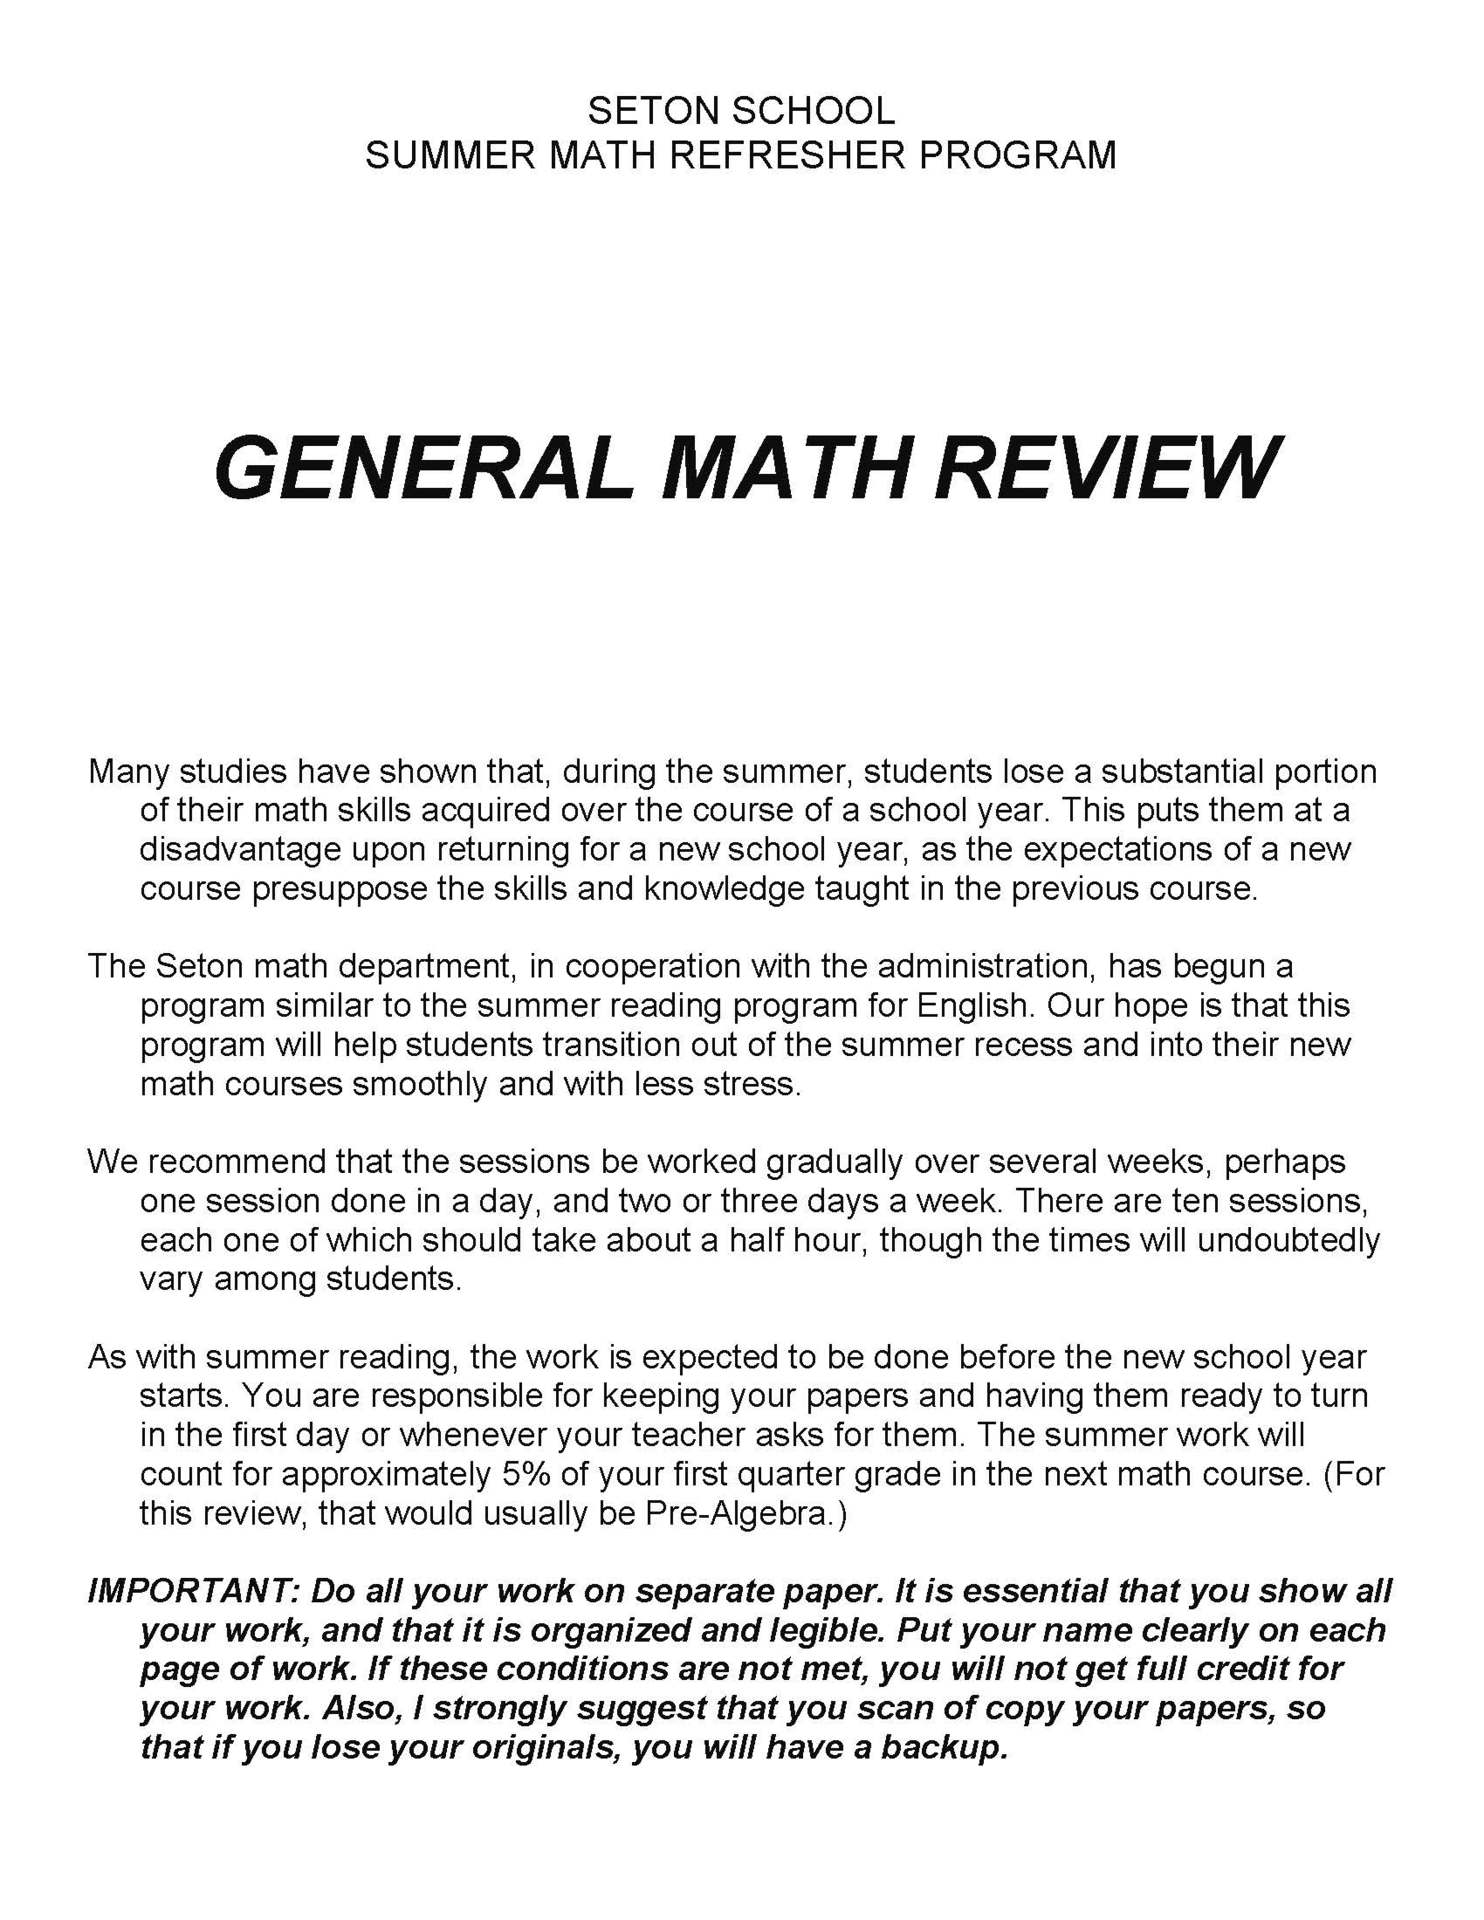 General Math Summer Review Page 1 Seton School Manassas